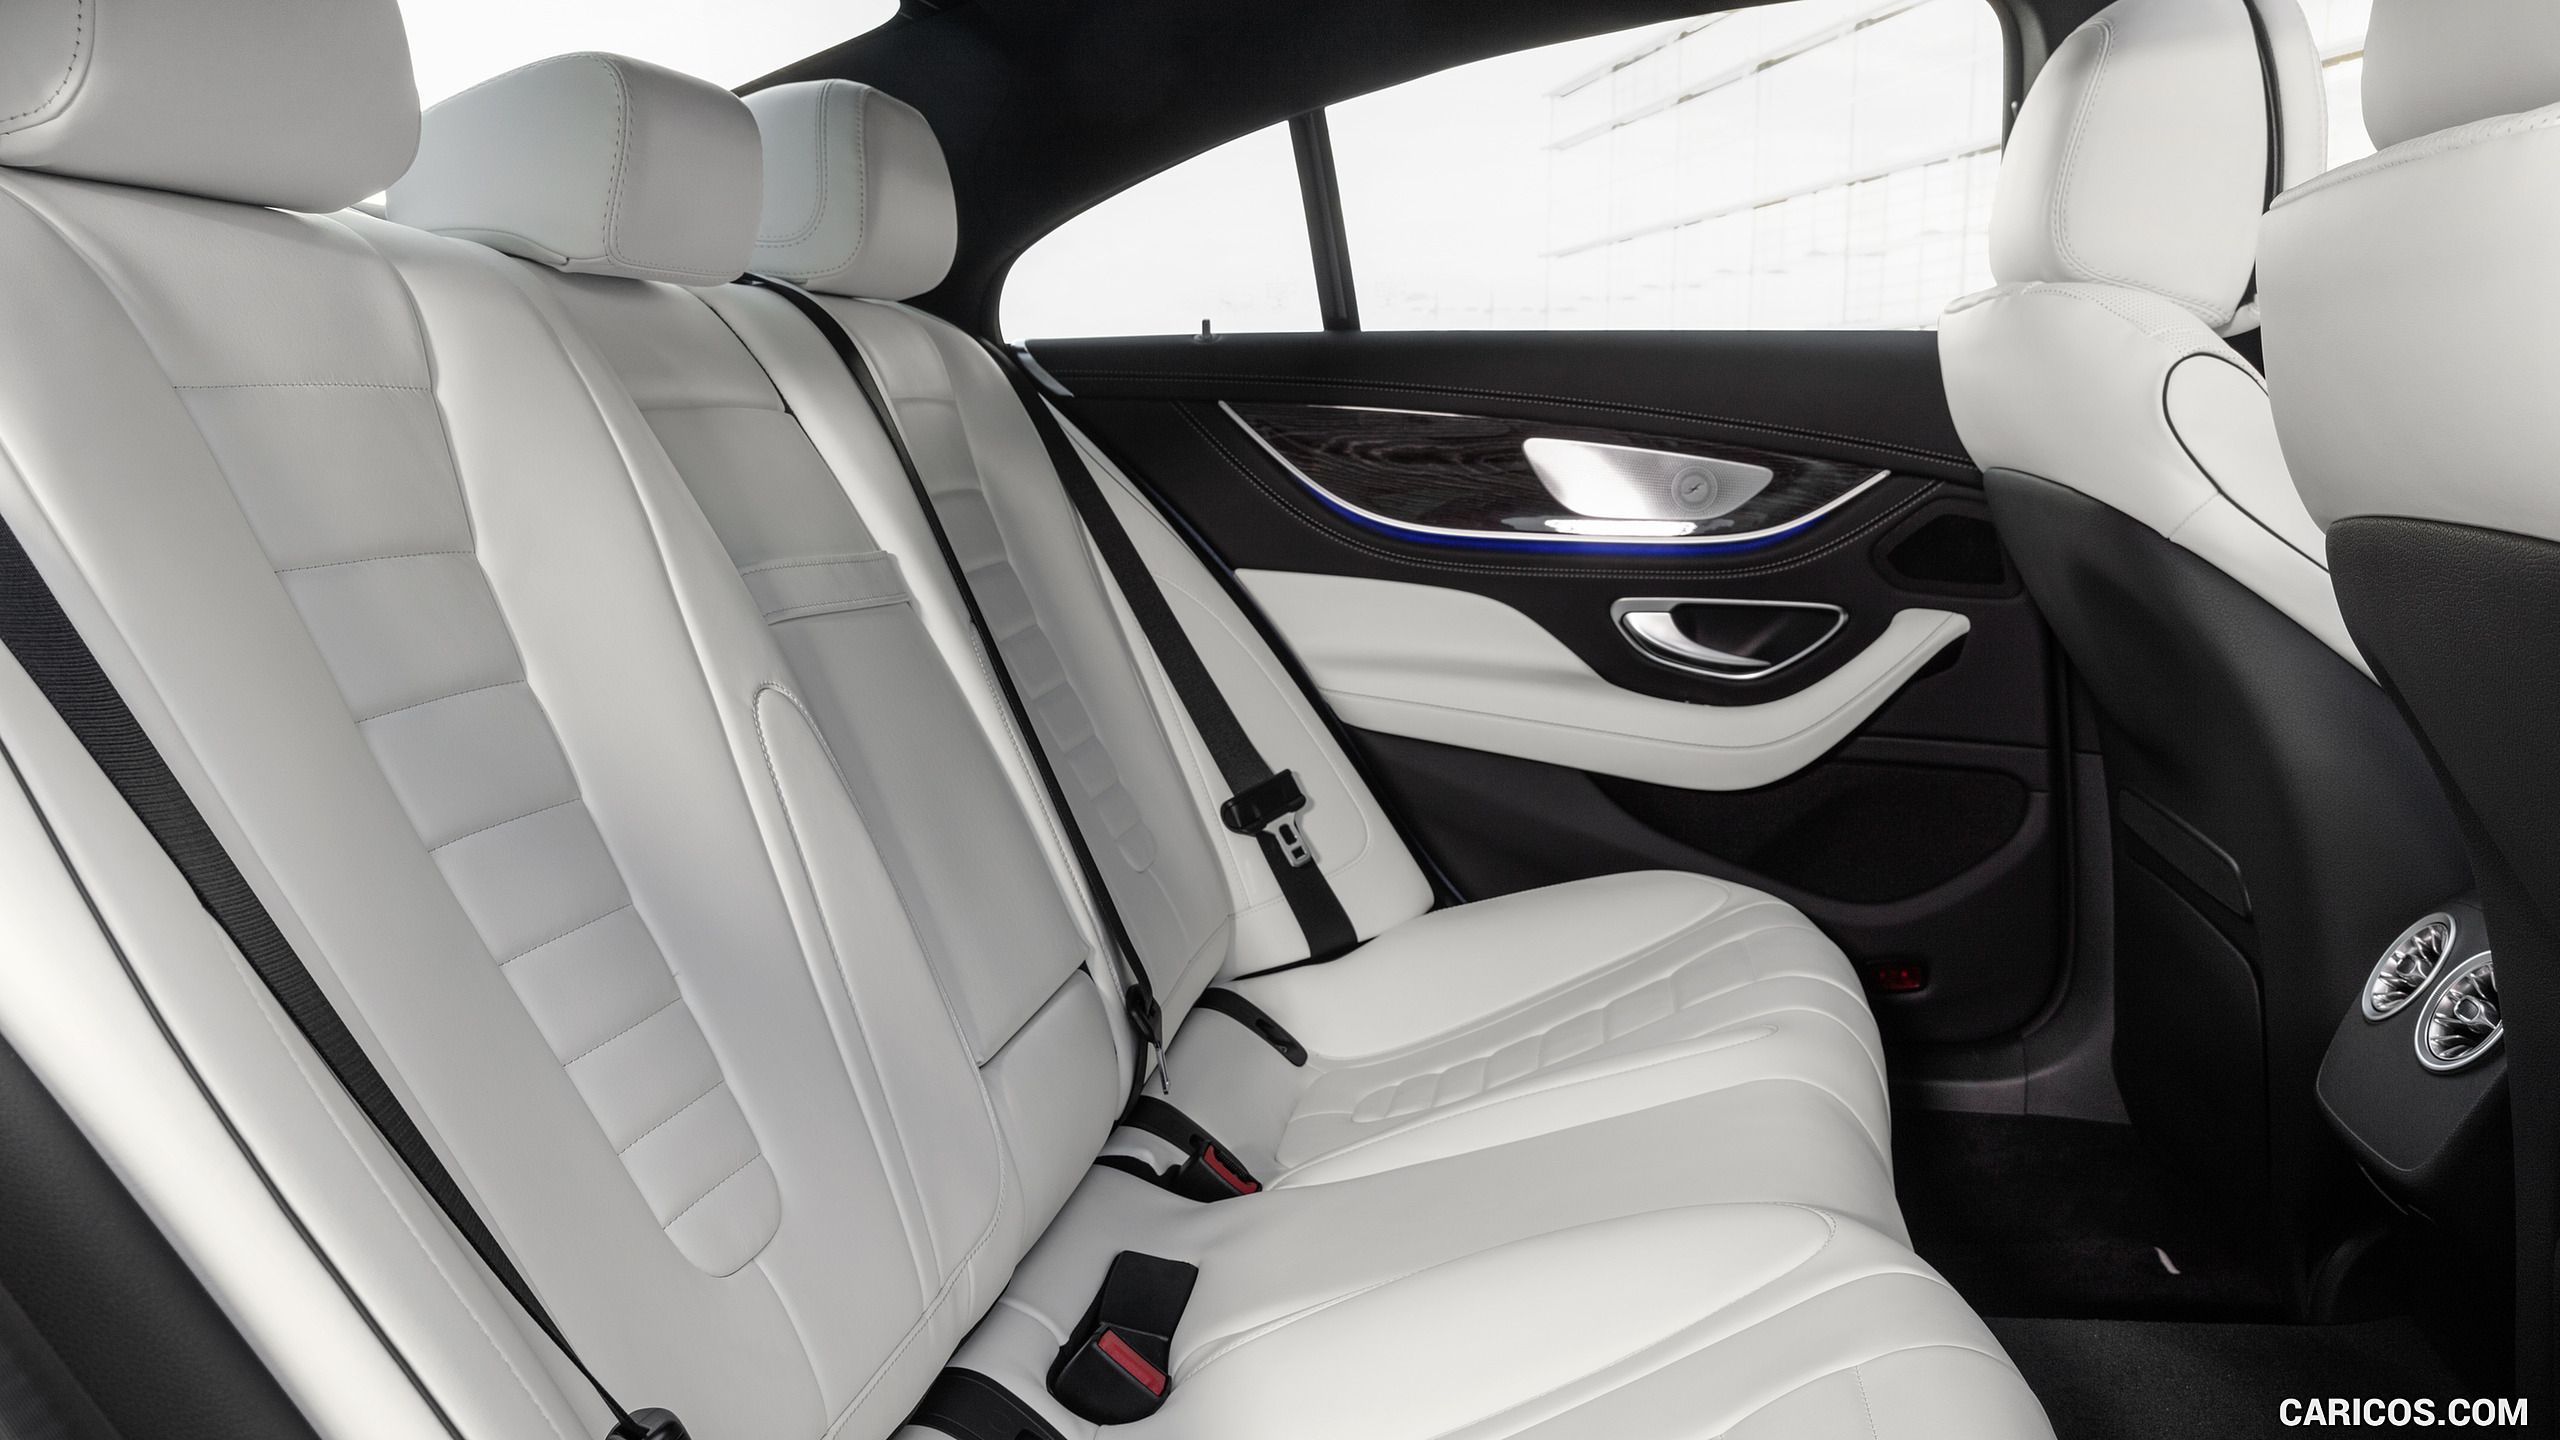 2022 Mercedes-Benz CLS AMG Line - Interior, Rear Seats, #36 of 36